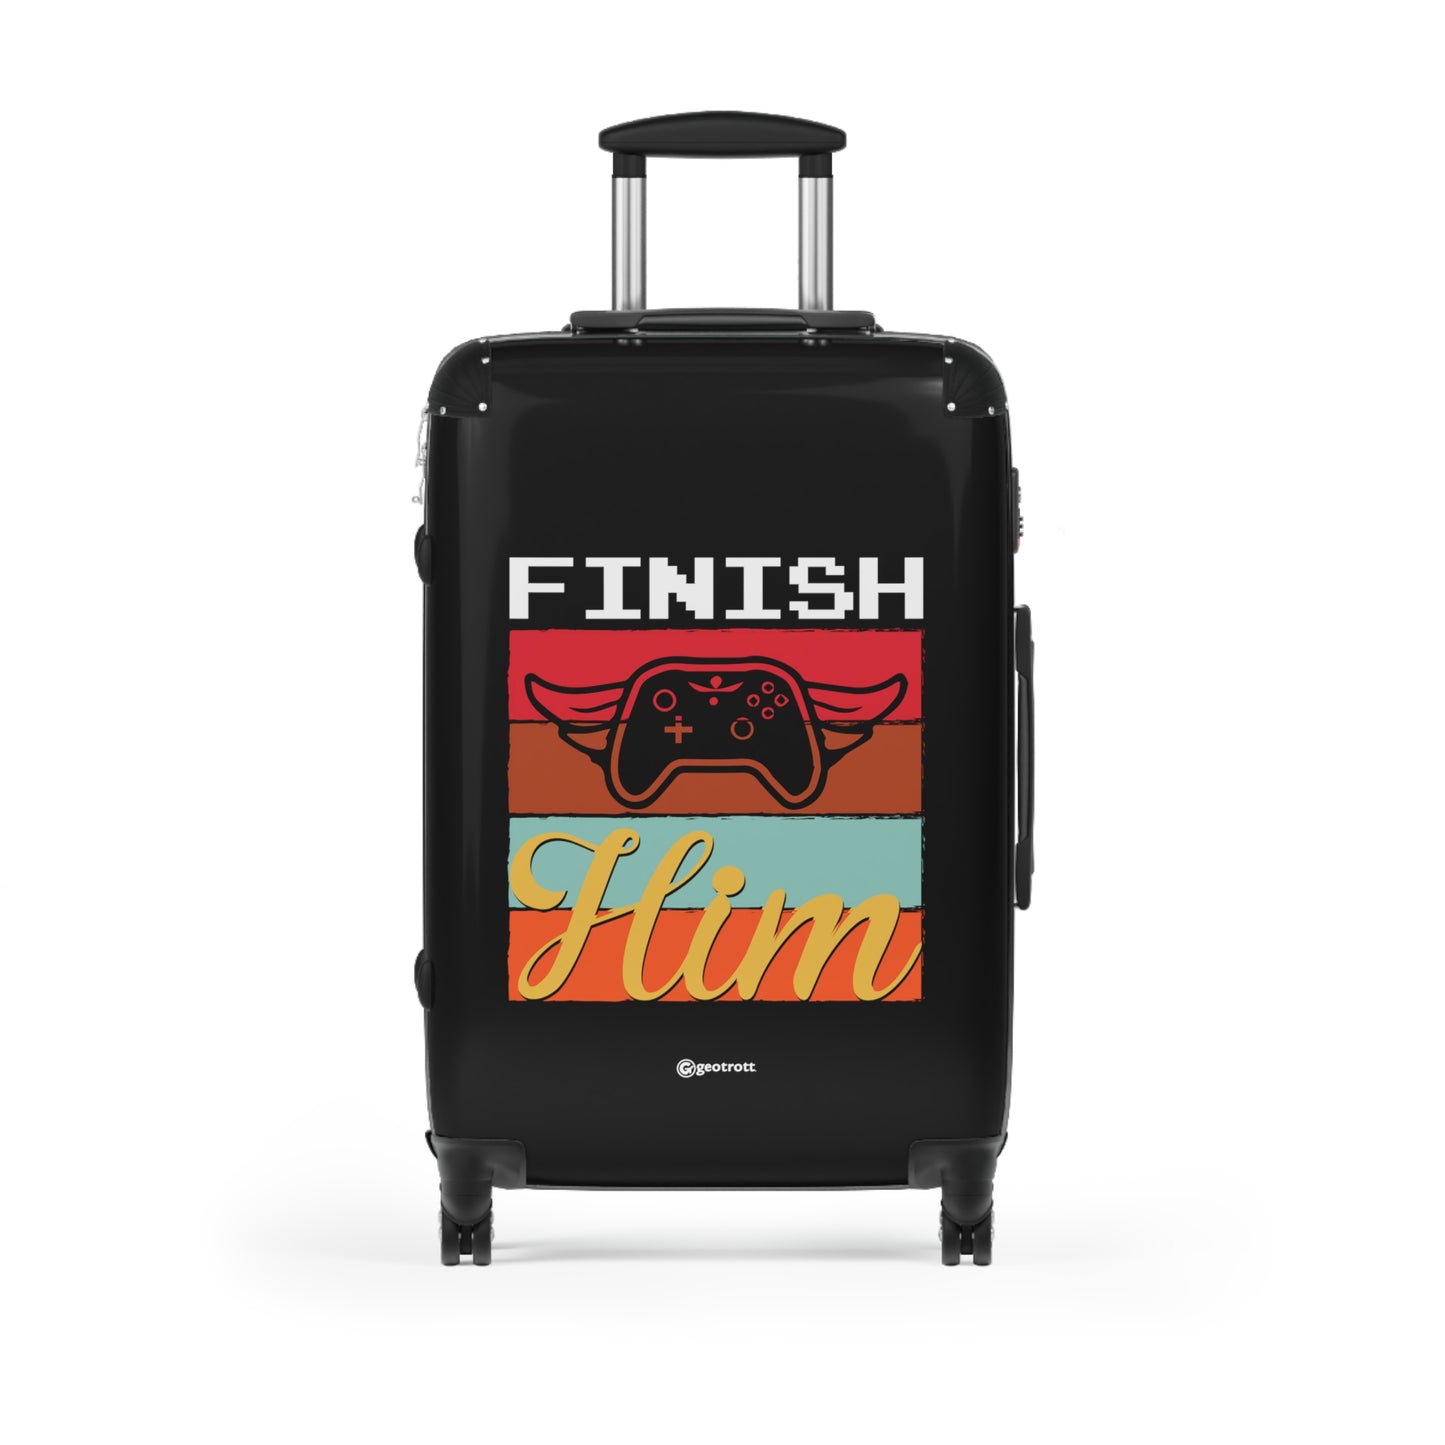 Finish Him 2 Gamer Gaming Suitcase-Bags-Geotrott